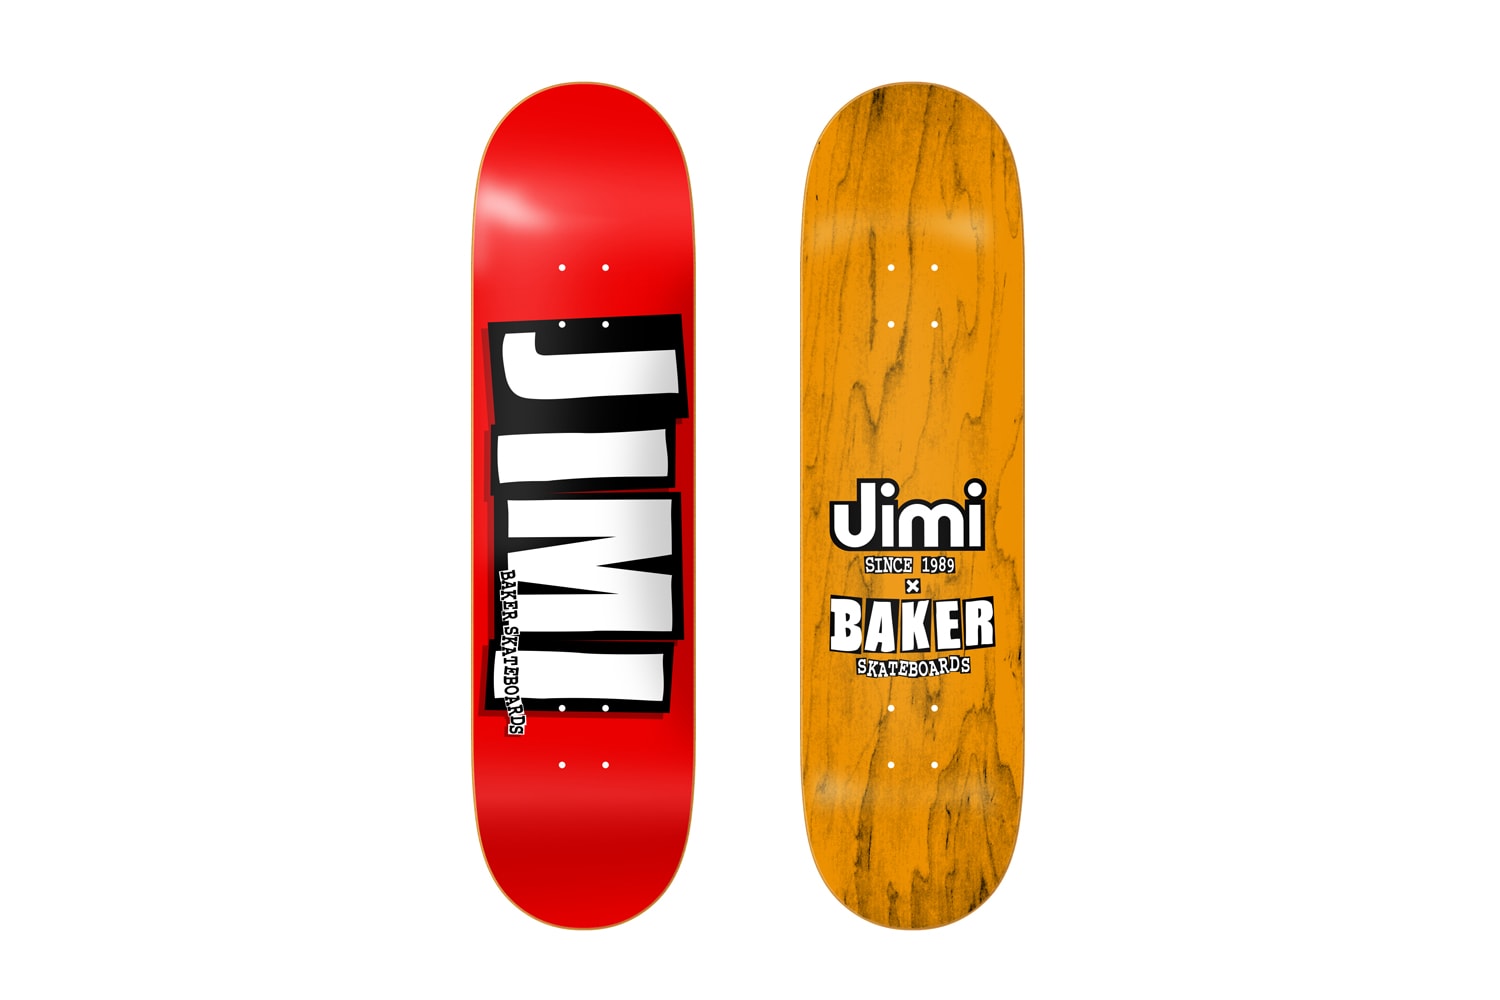 Baker Skateboards and Jimi Skate Shop collaborate for new skateboard